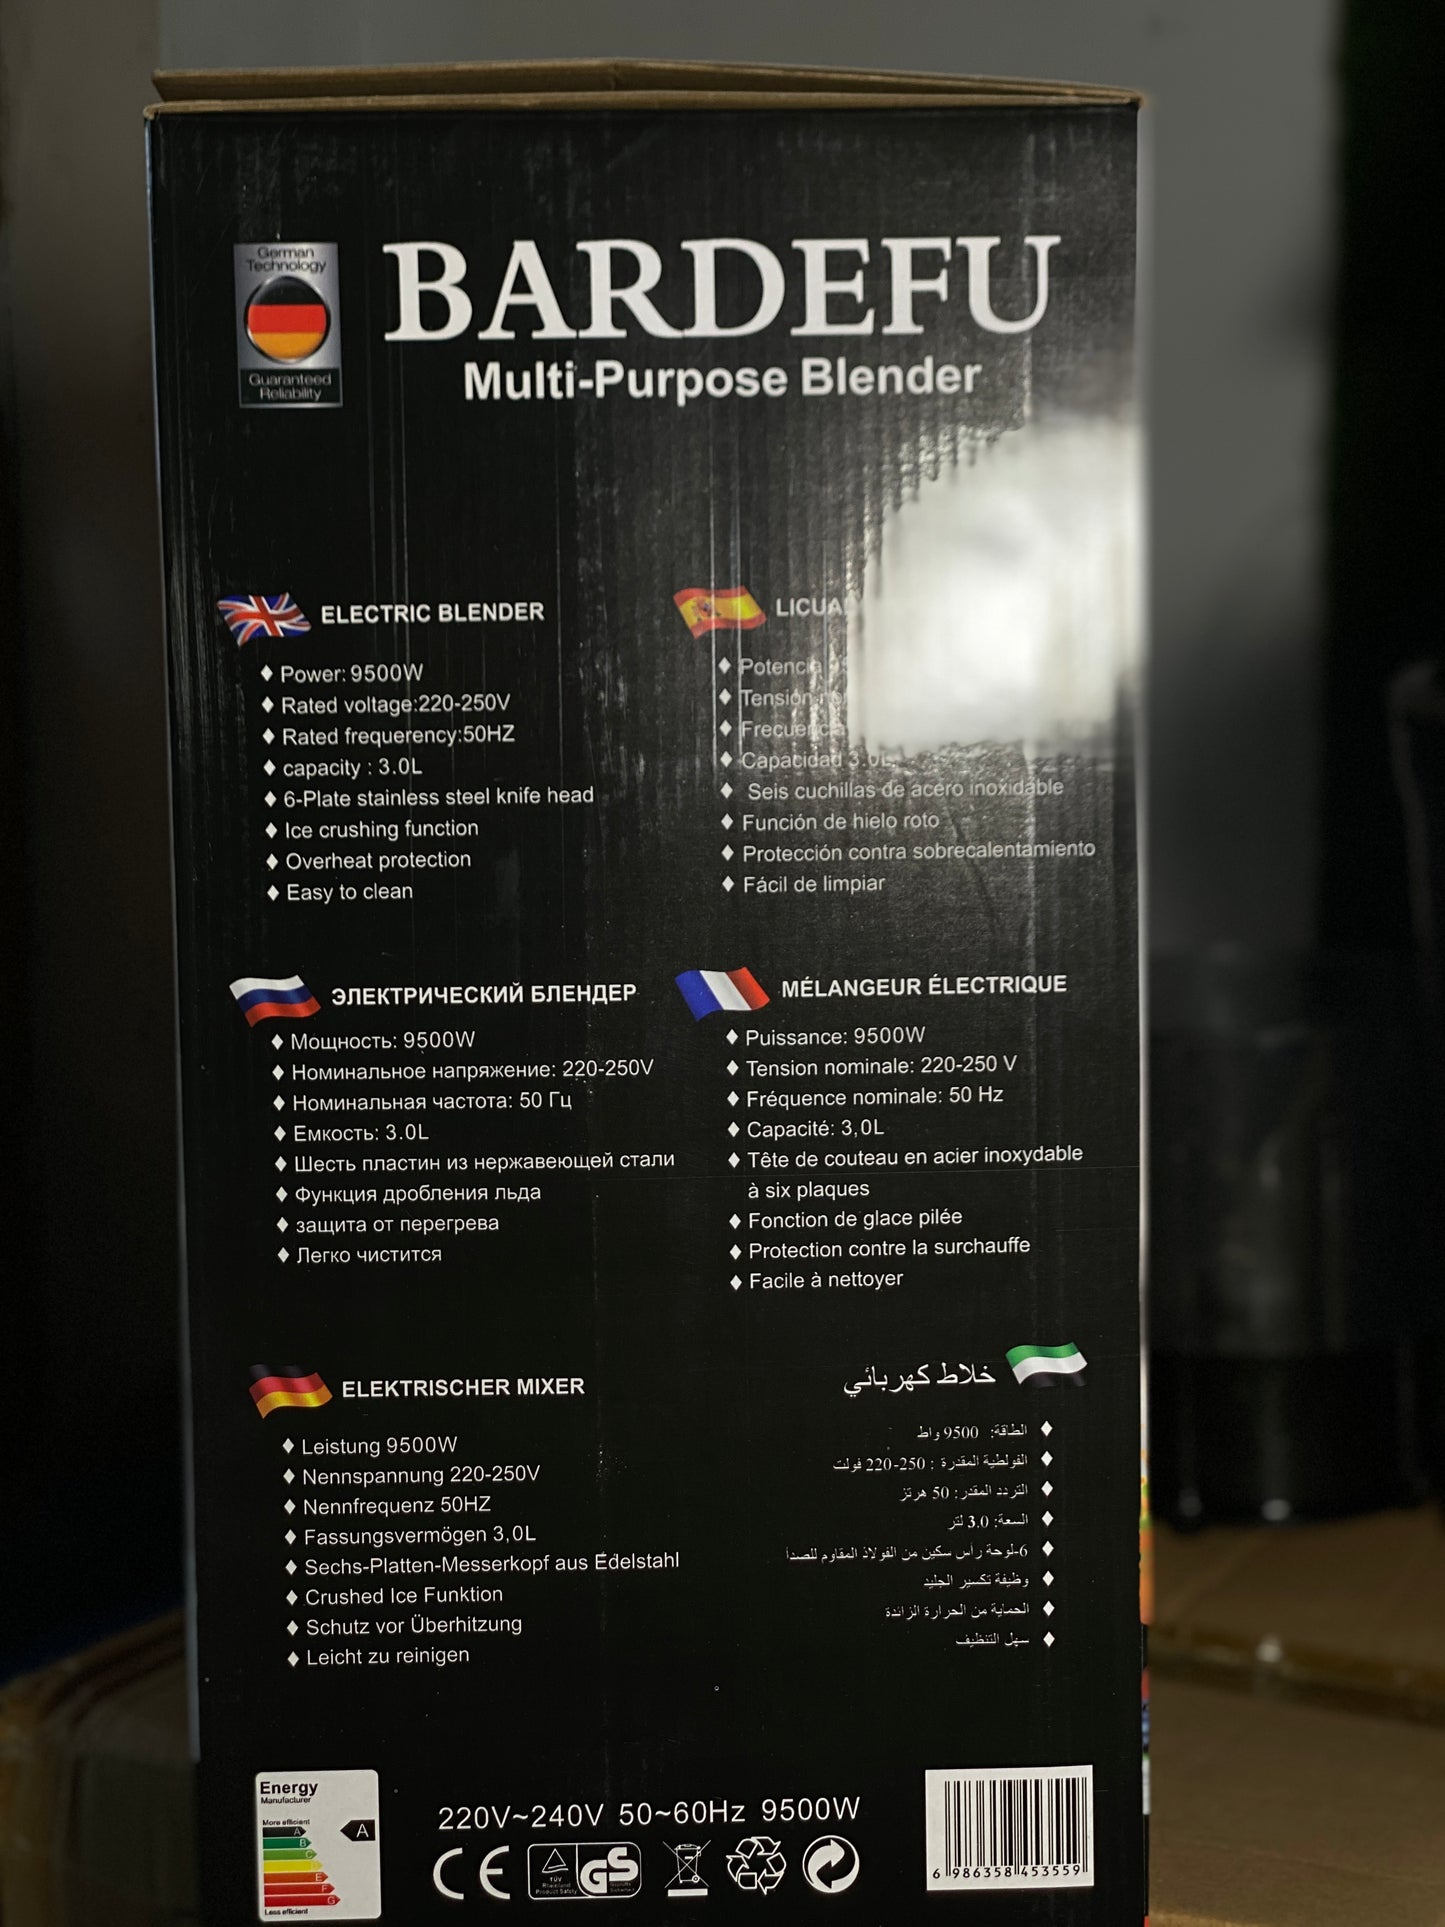 German Lot Imported Bardefu Multi Purpose Blender BF-5022